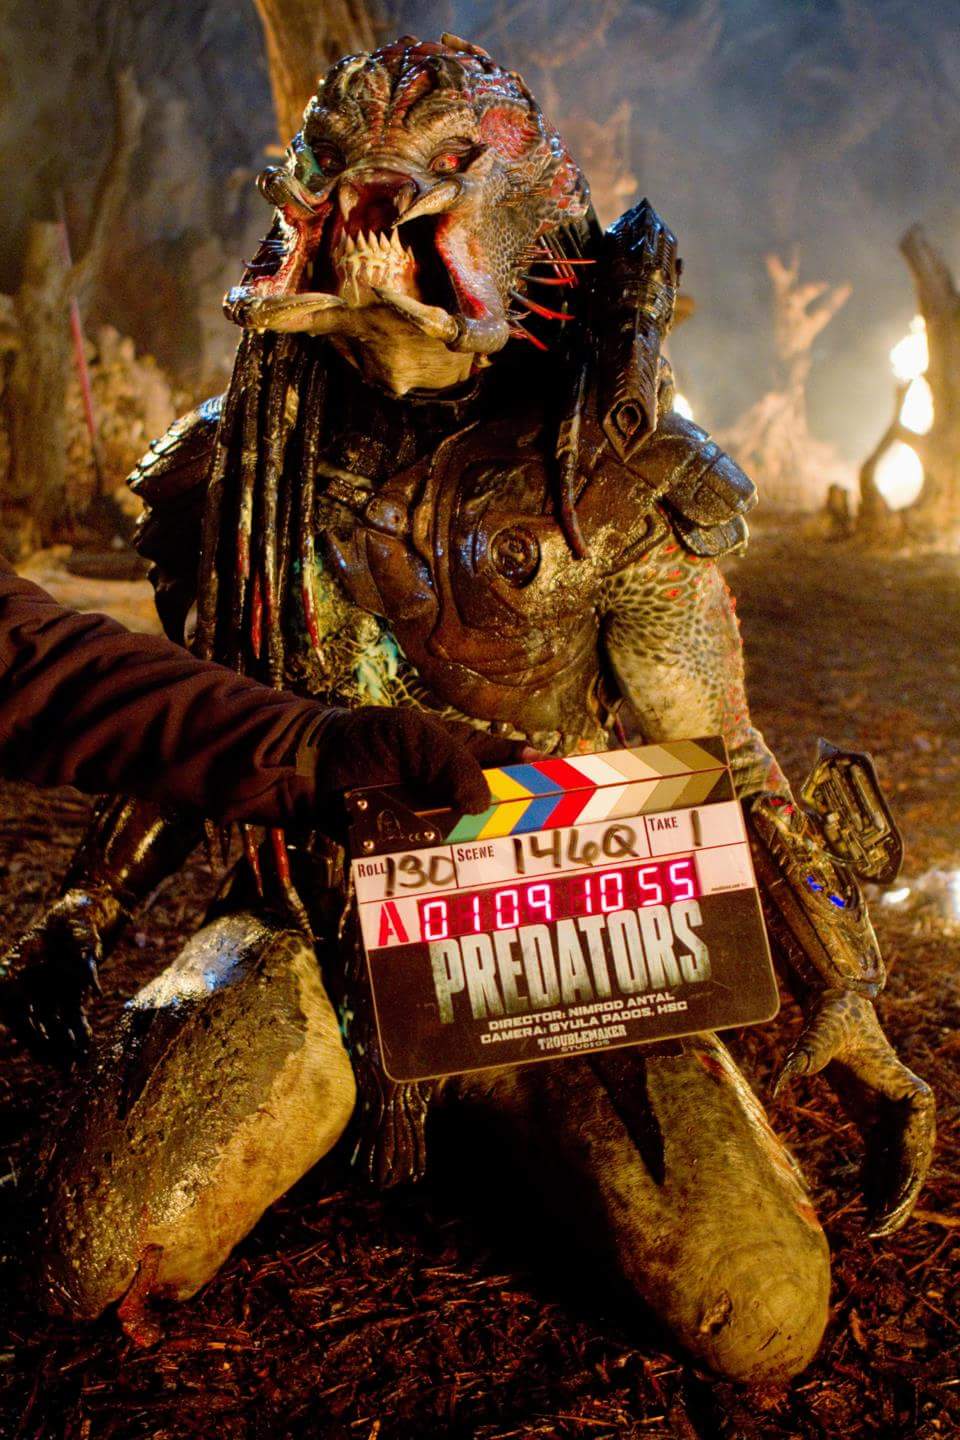 Predator Images images